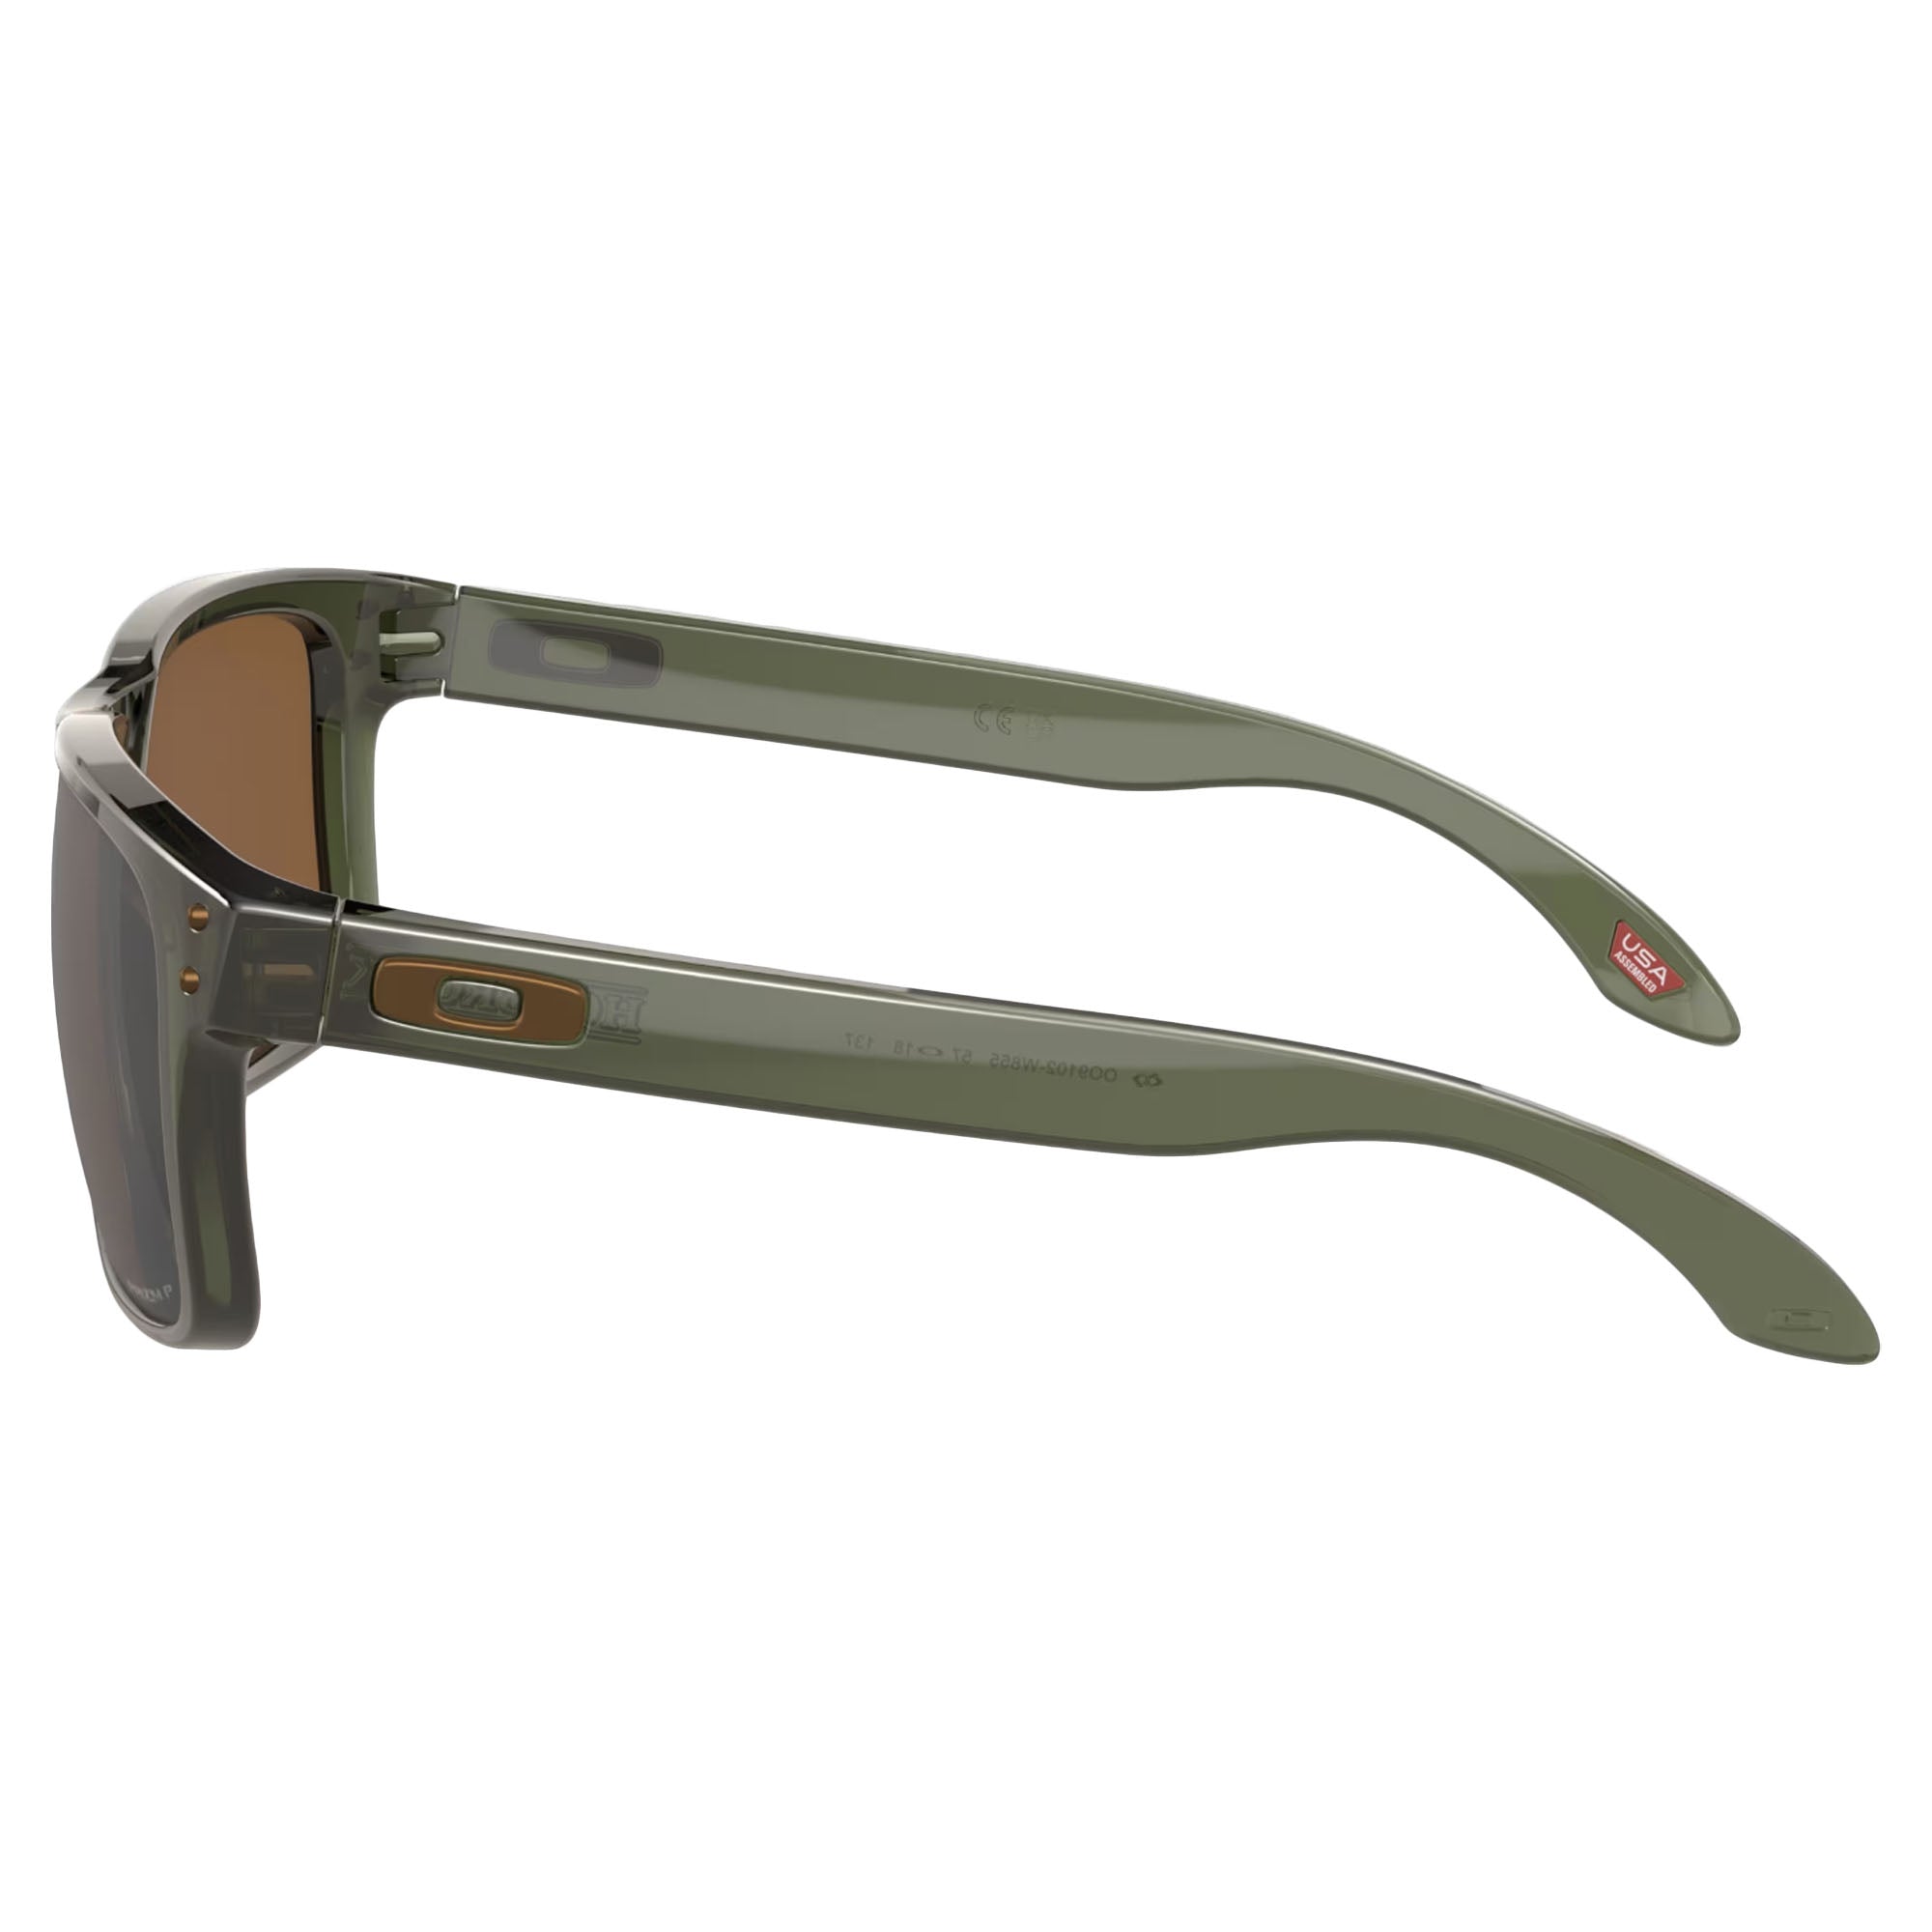 Oakley OO9102-W855 Men's OO9102 Holbrook Square Sunglasses